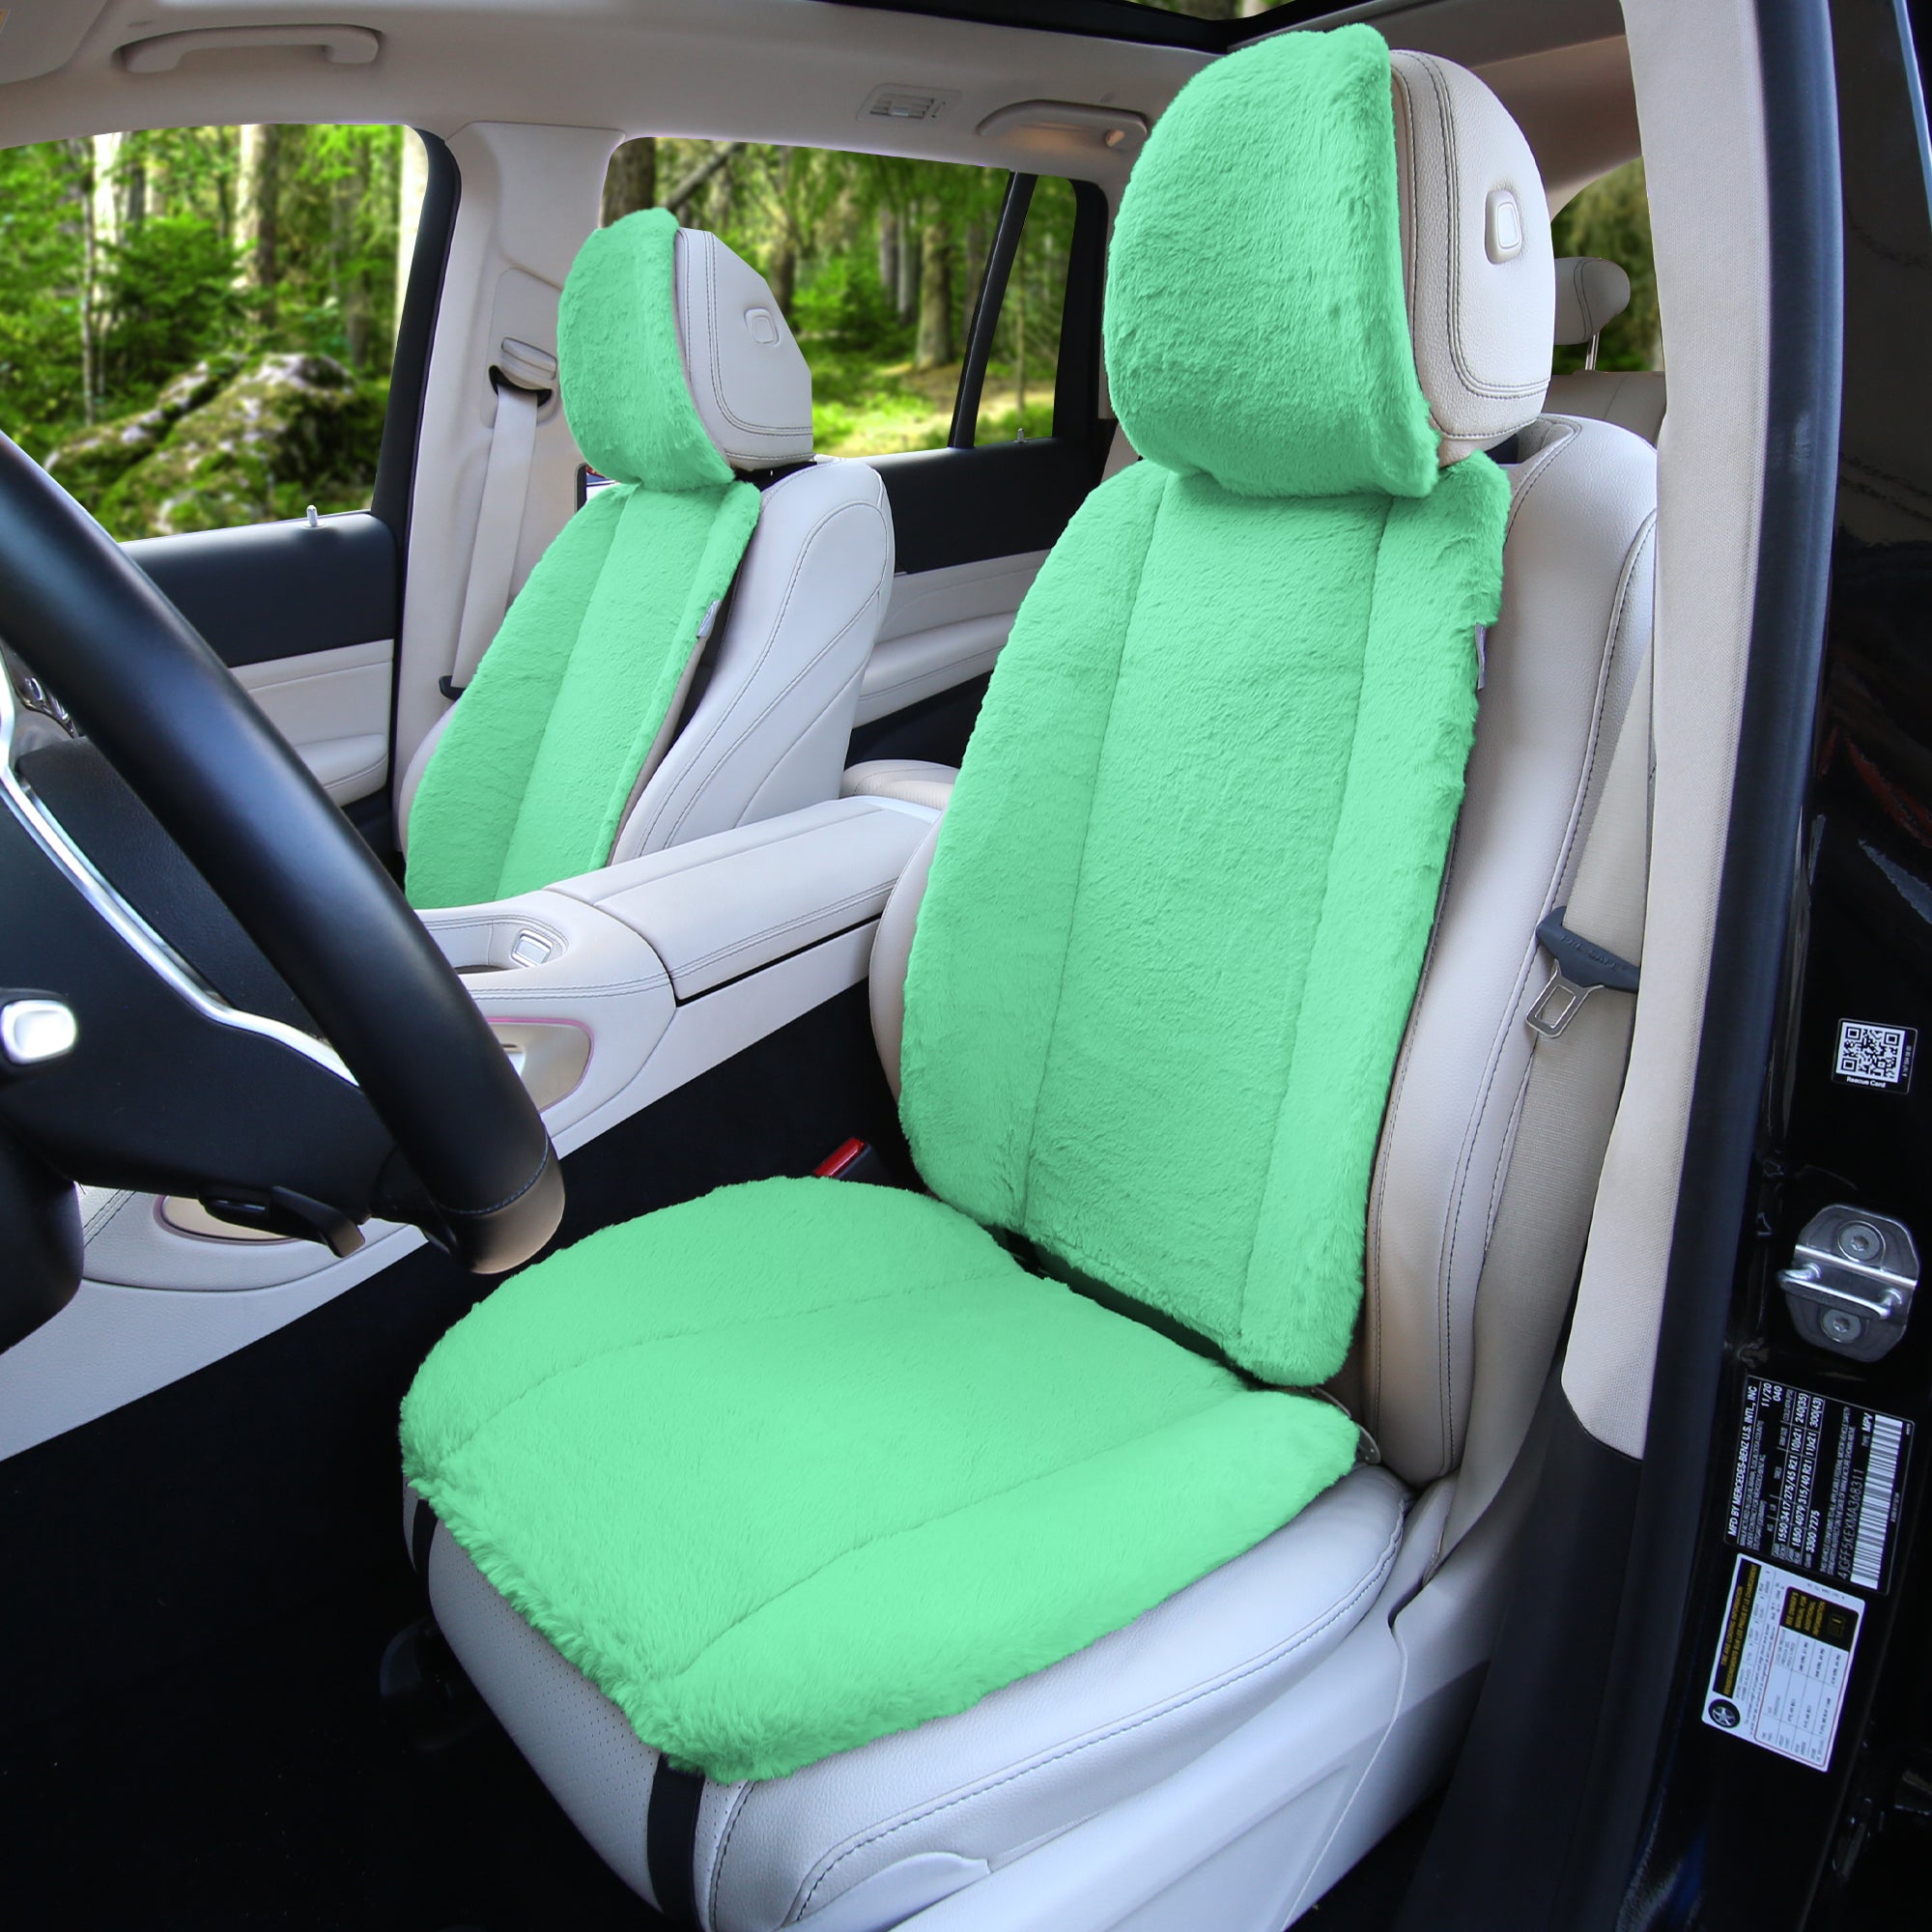 FH Group Ergonomic Cooling Gel Car Seat Cushion with Bonus Air Freshener, Blue